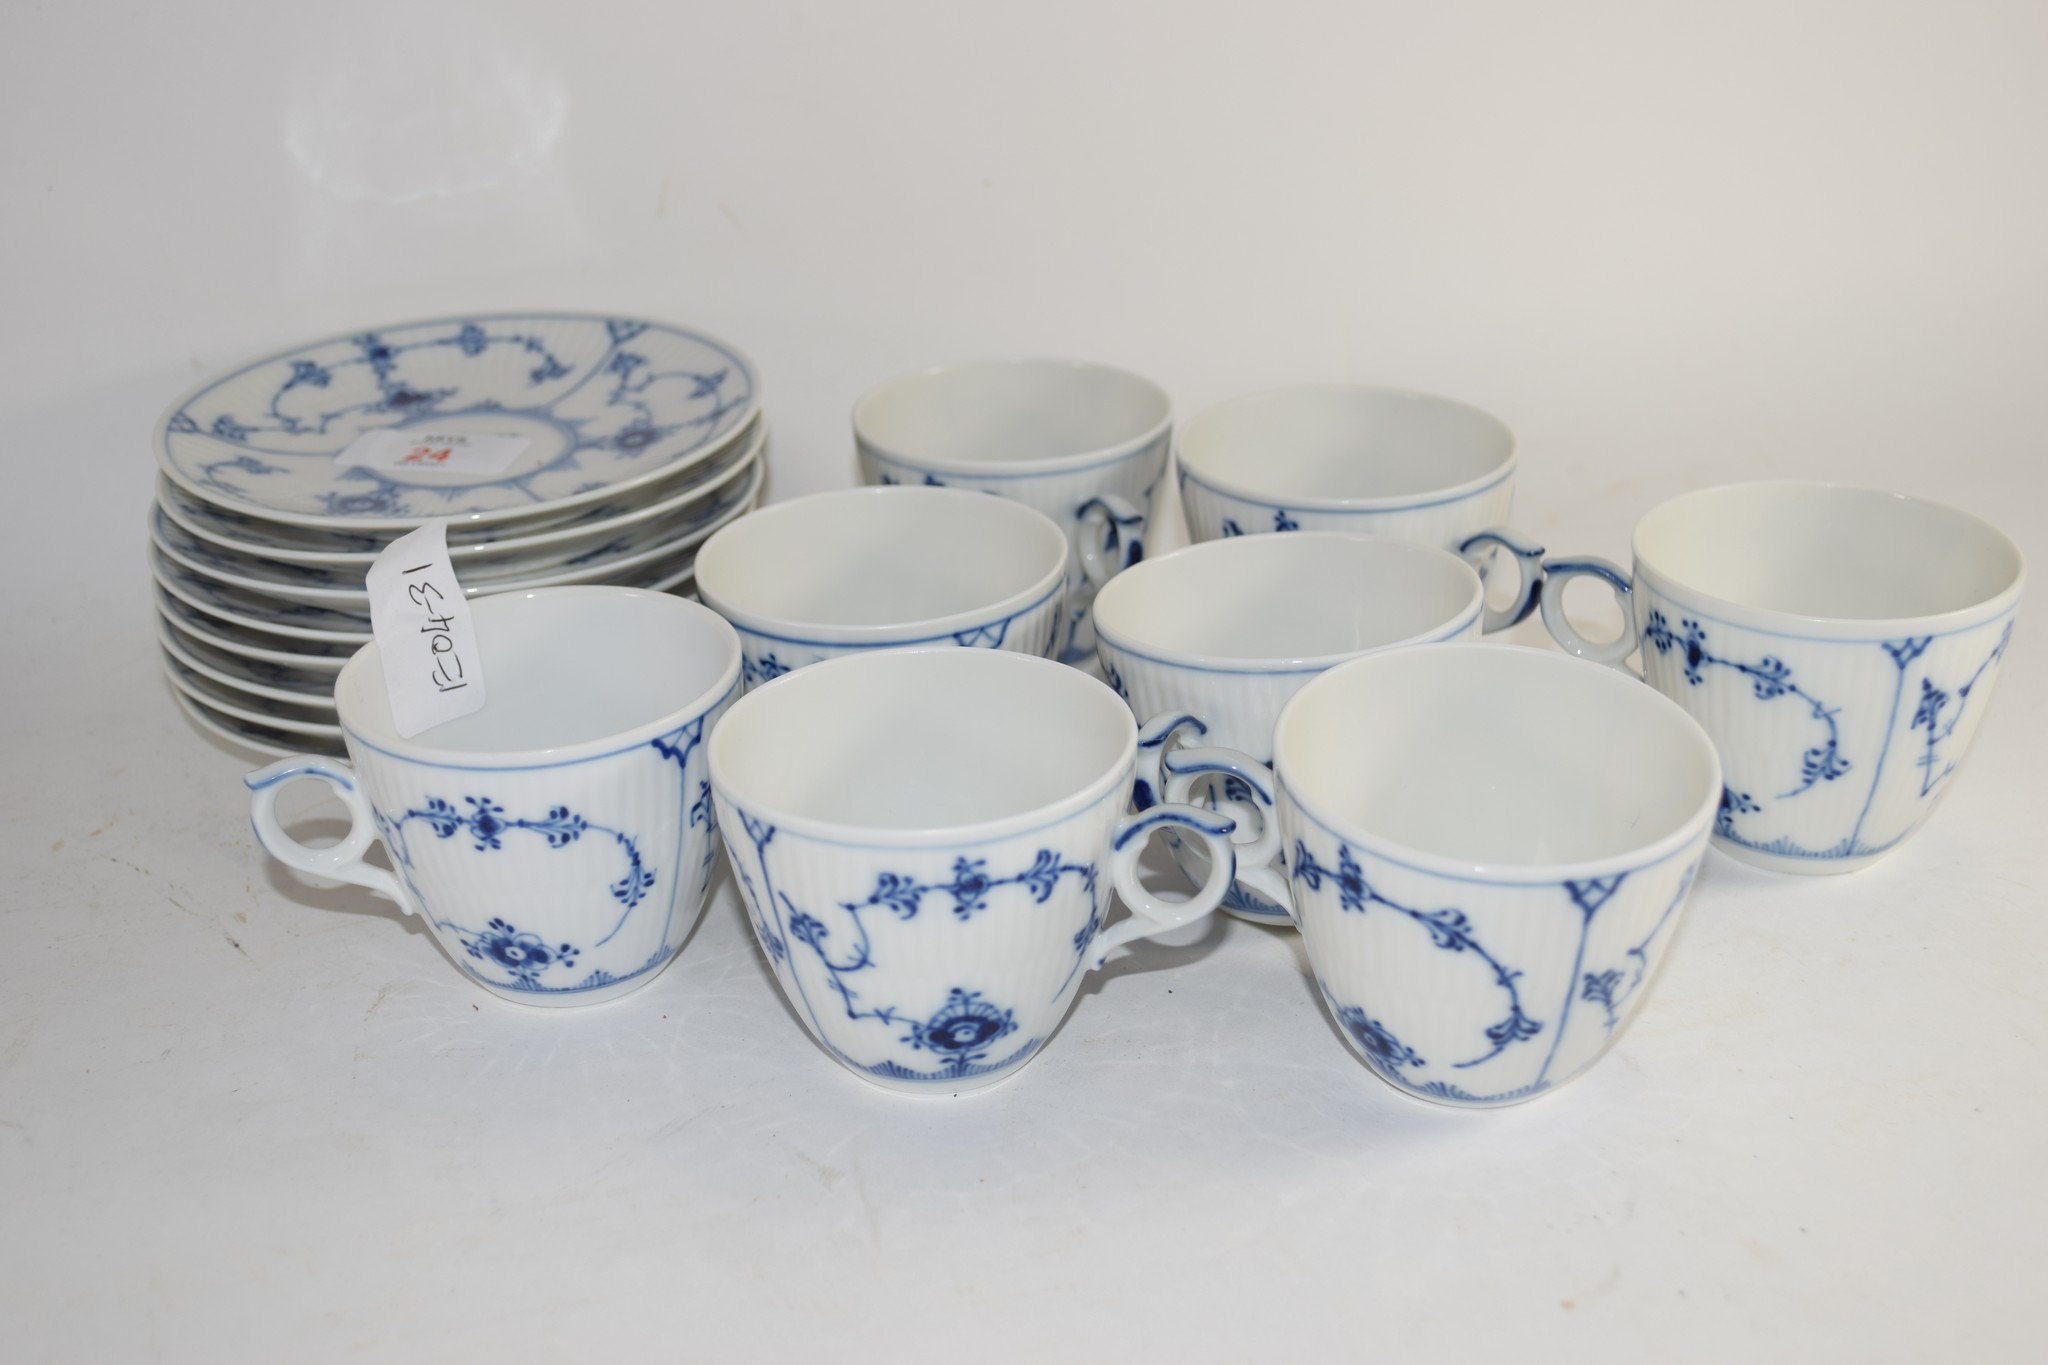 PART COPENHAGEN PORCELAIN TEA SET IN MEISSEN STYLE COMPRISING 8 CUPS AND SAUCERS